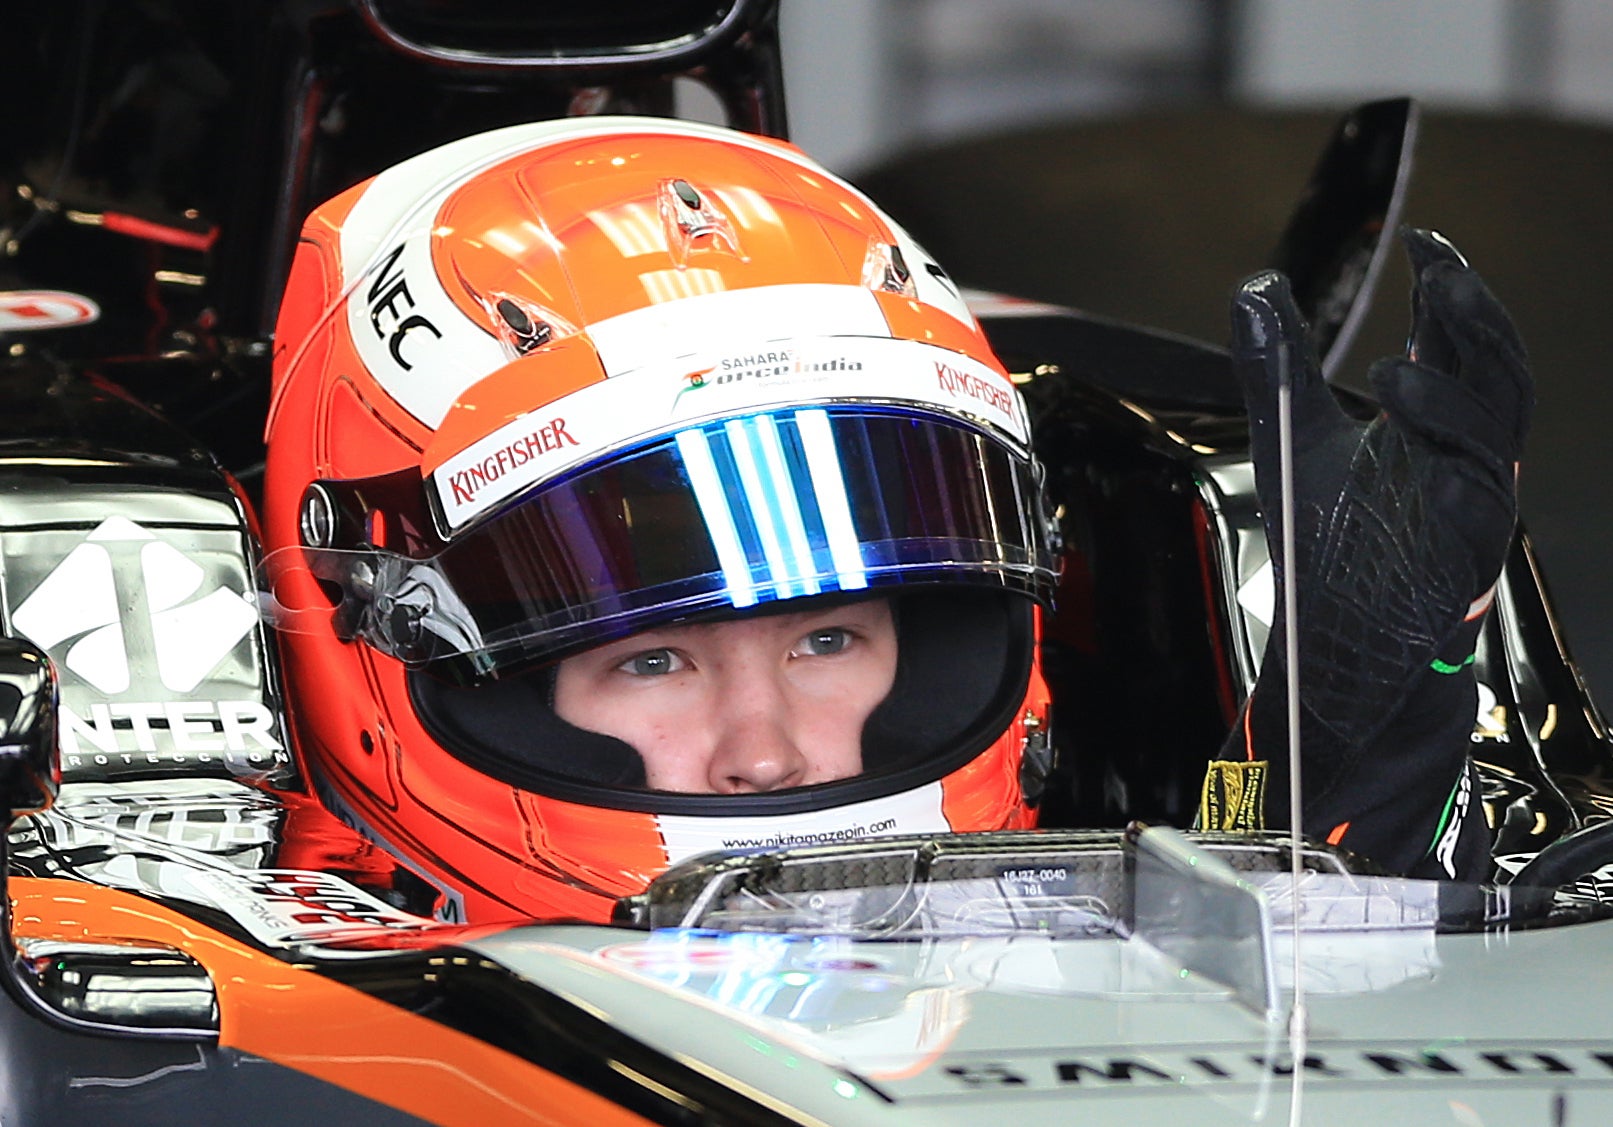 Nikita Mazepin will drive for Haas this season